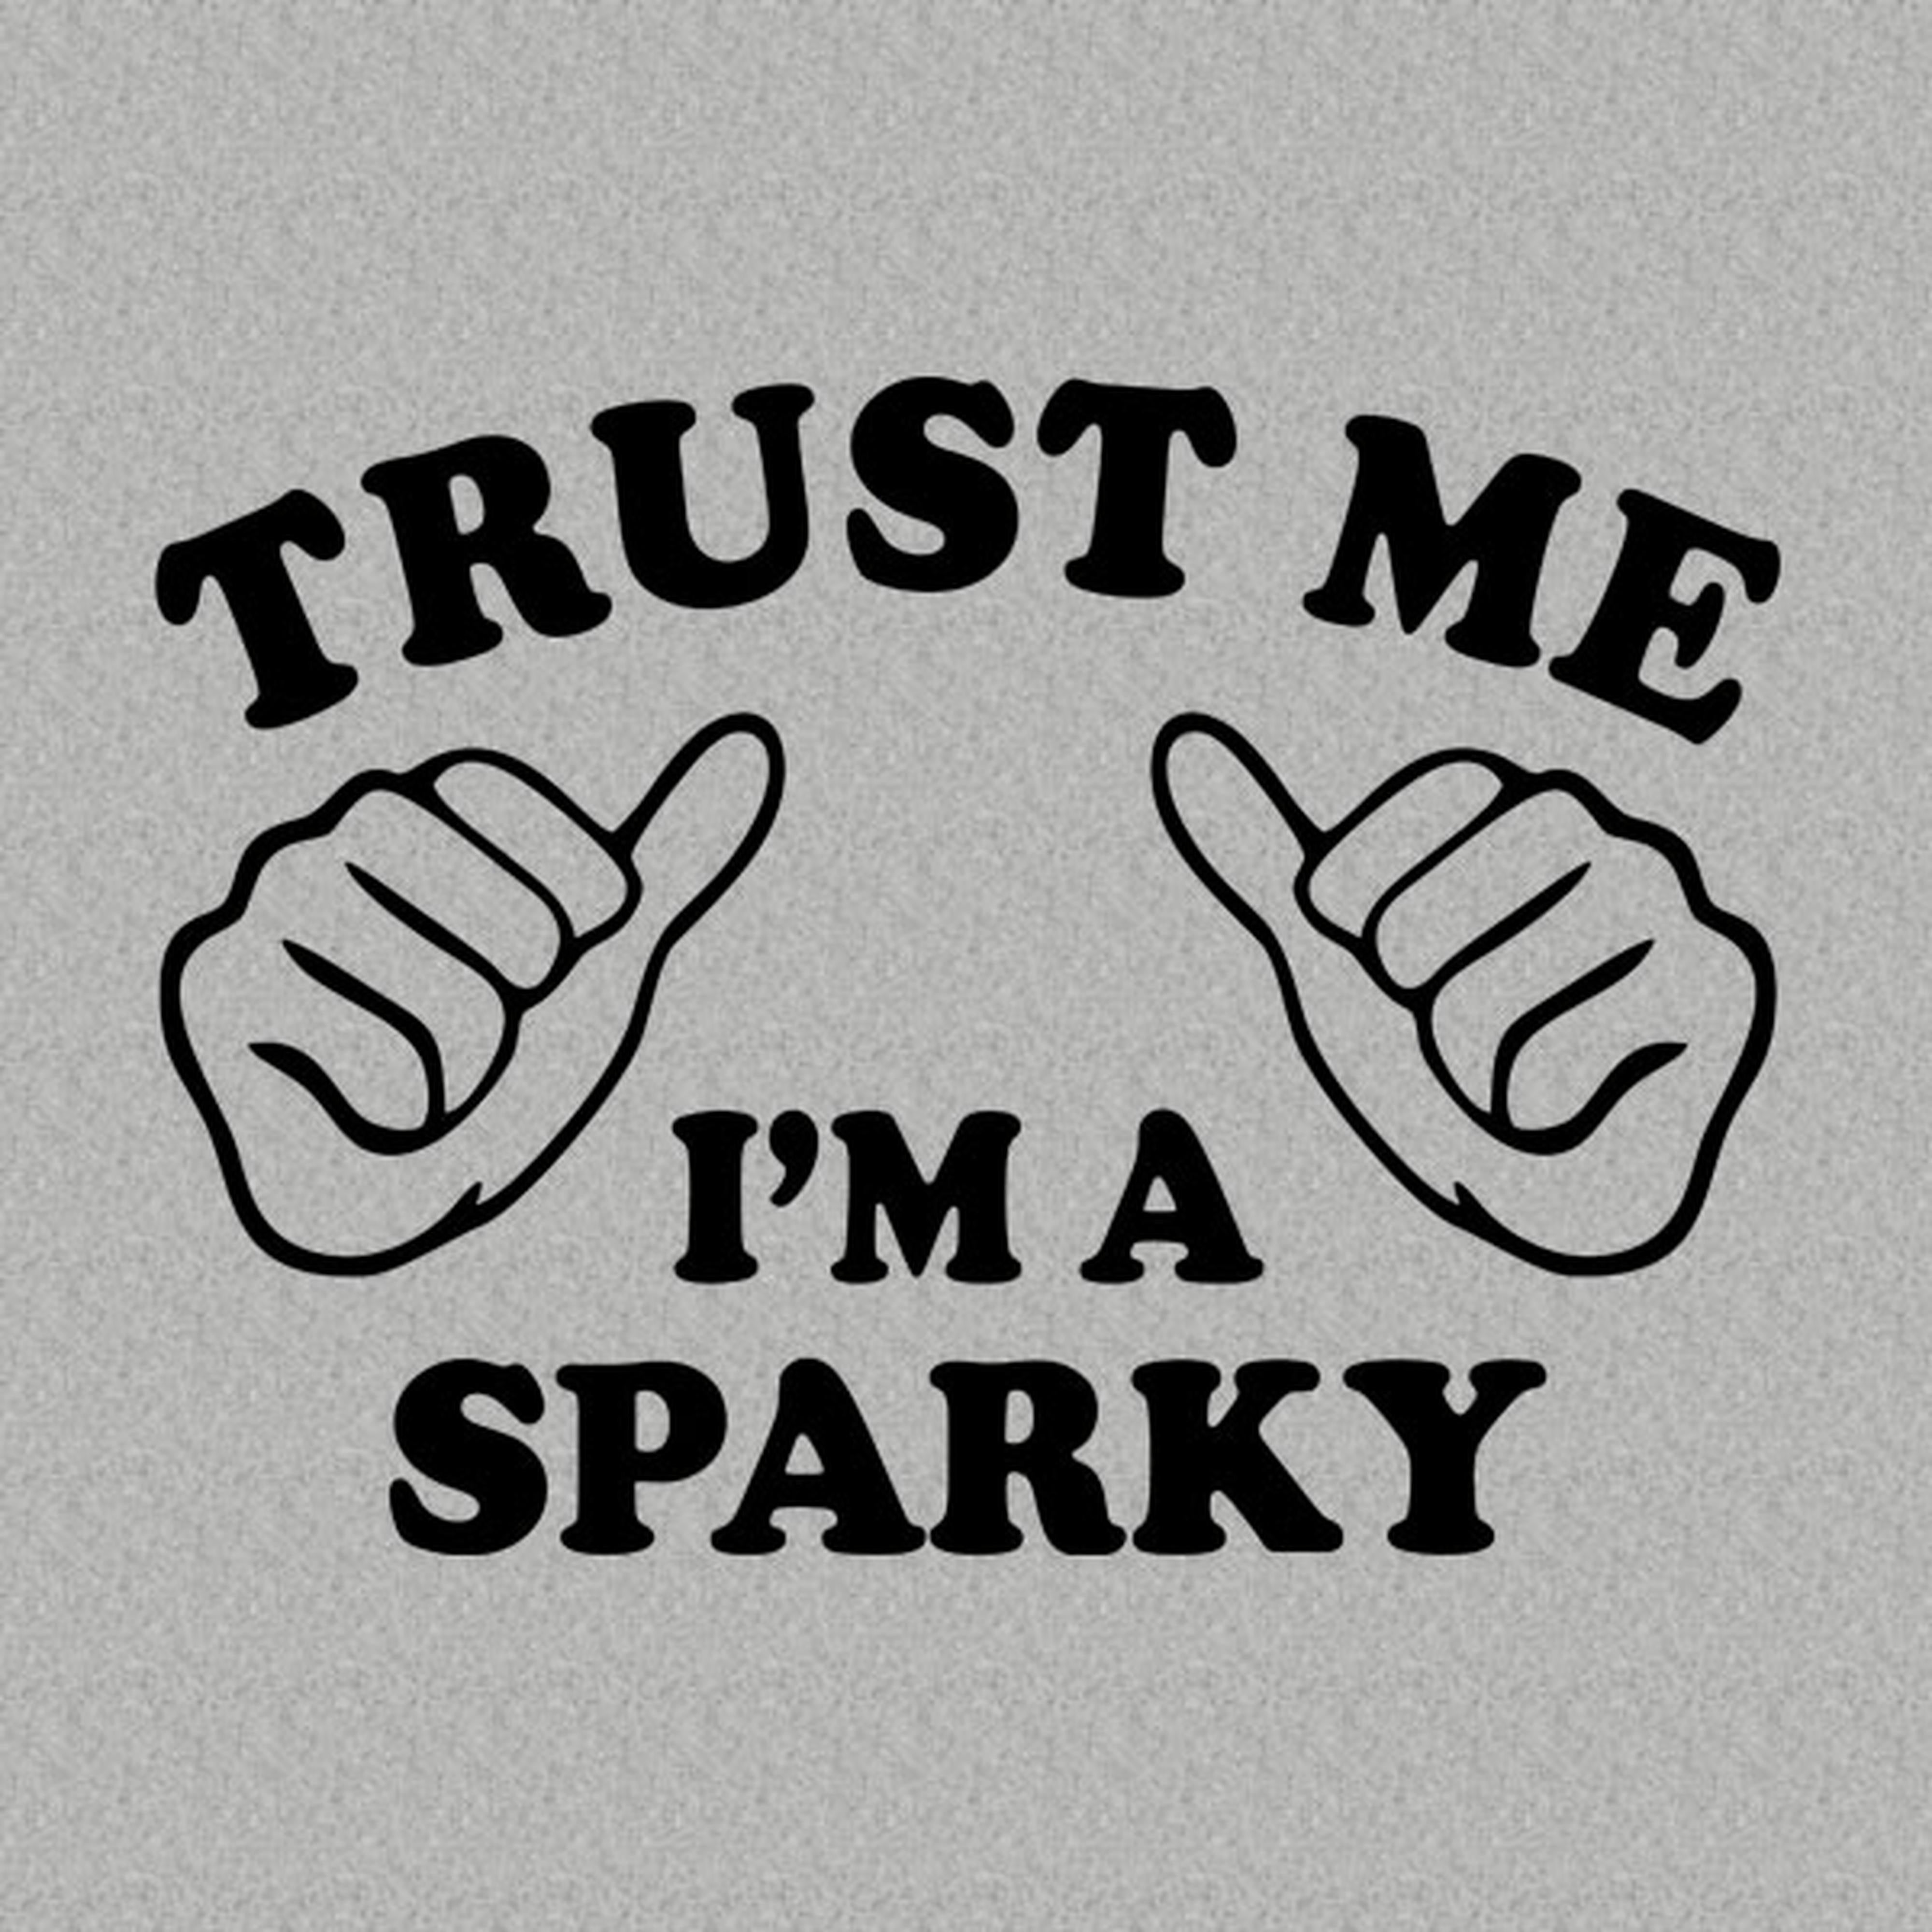 Trust me - I am a sparky - T-shirt